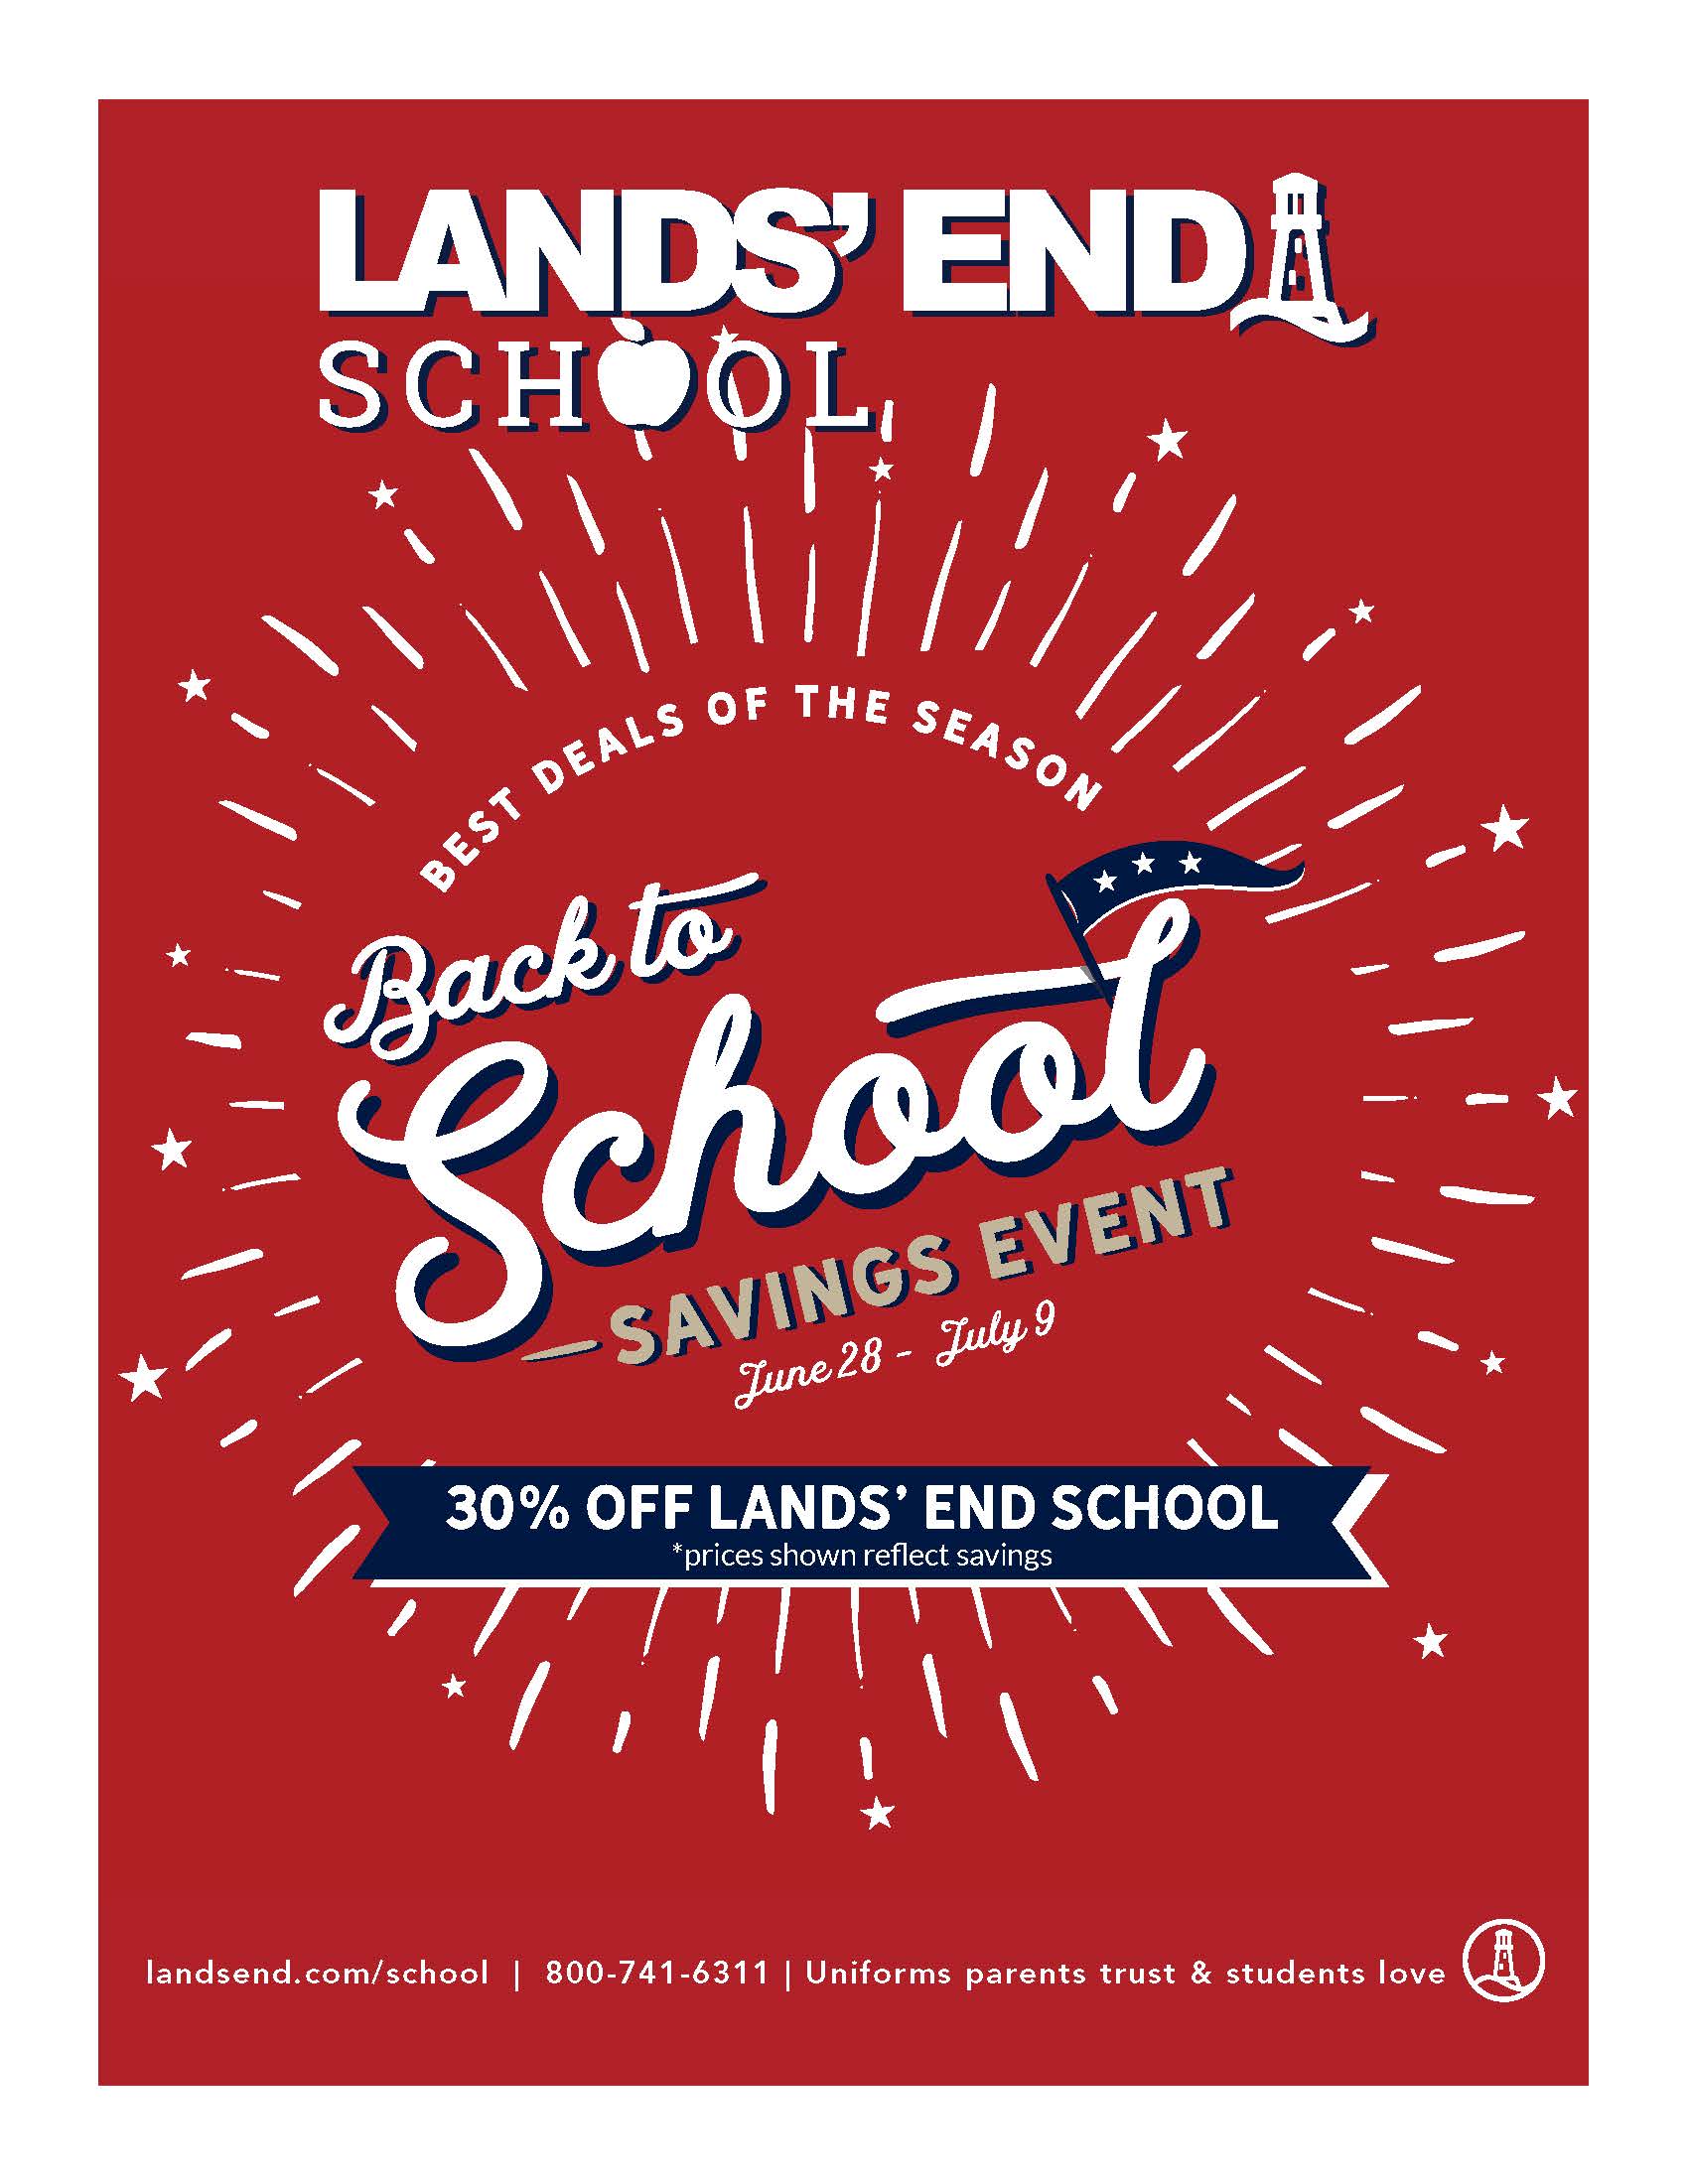 Christian Academy School System | Lands' End Back-to-School Sale | June 28 - July 9